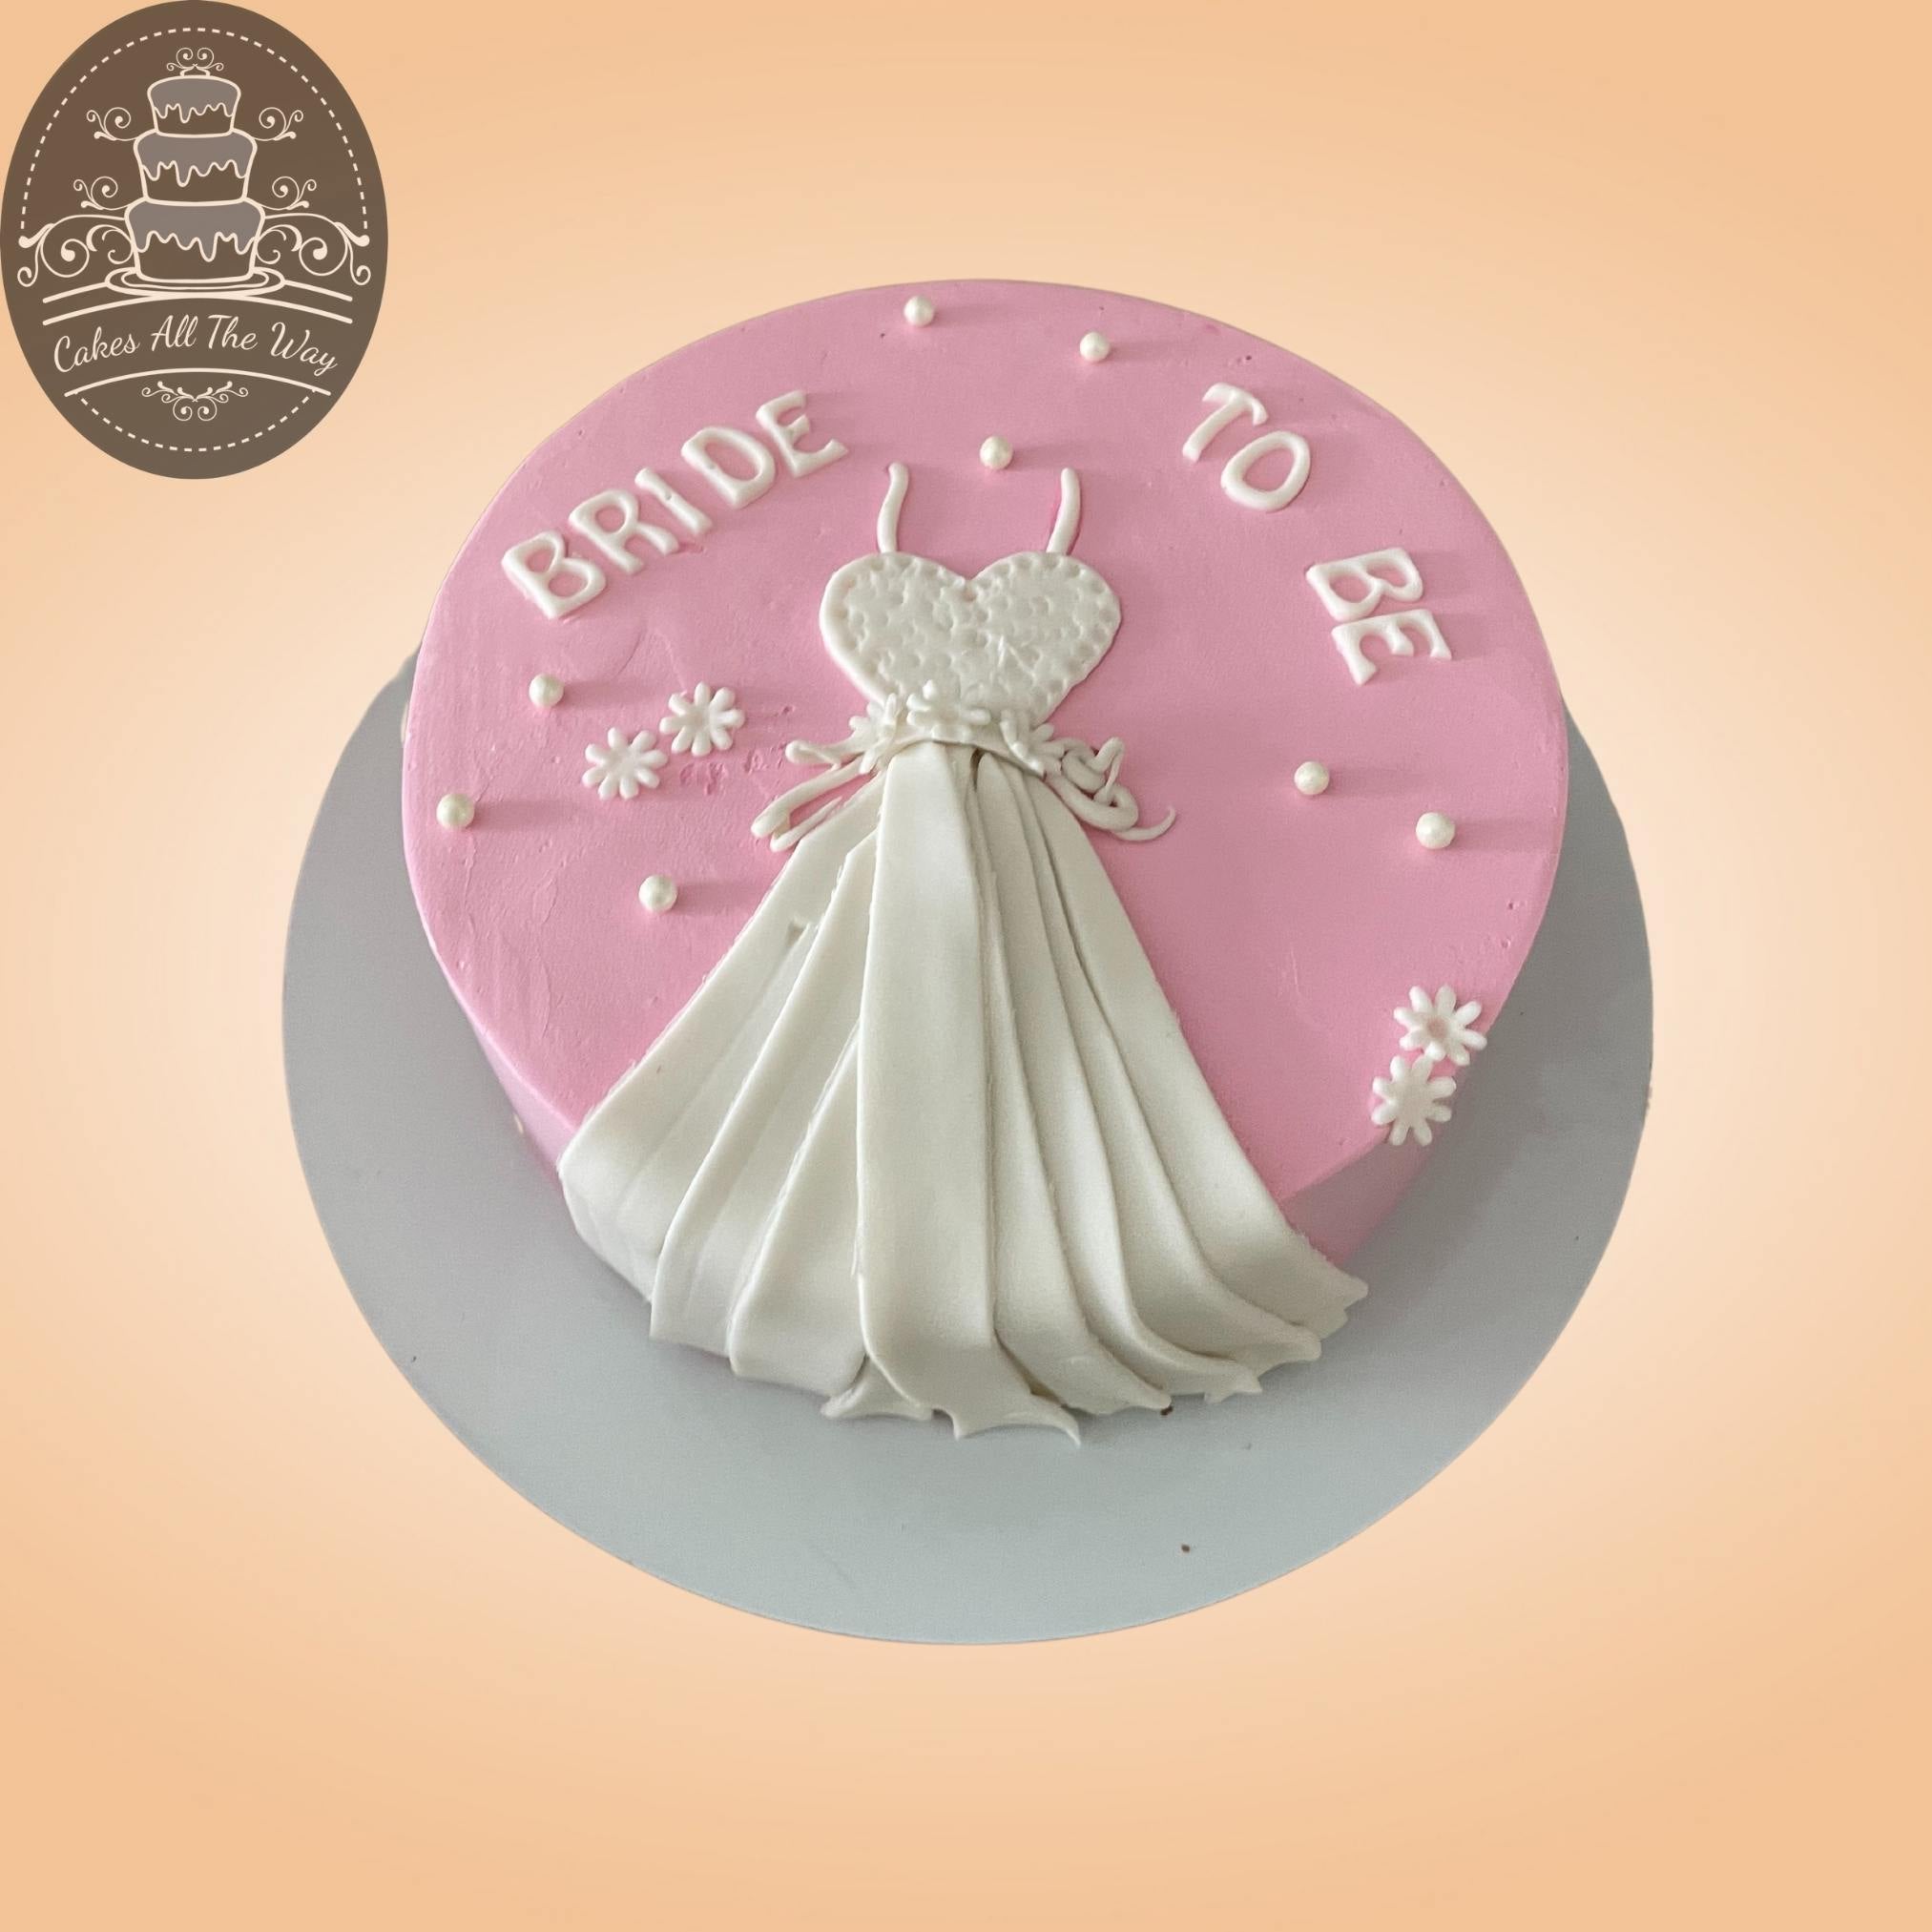 Bride To Be Cake|Wedding cake Online Hyderabad|CakeSmash.in